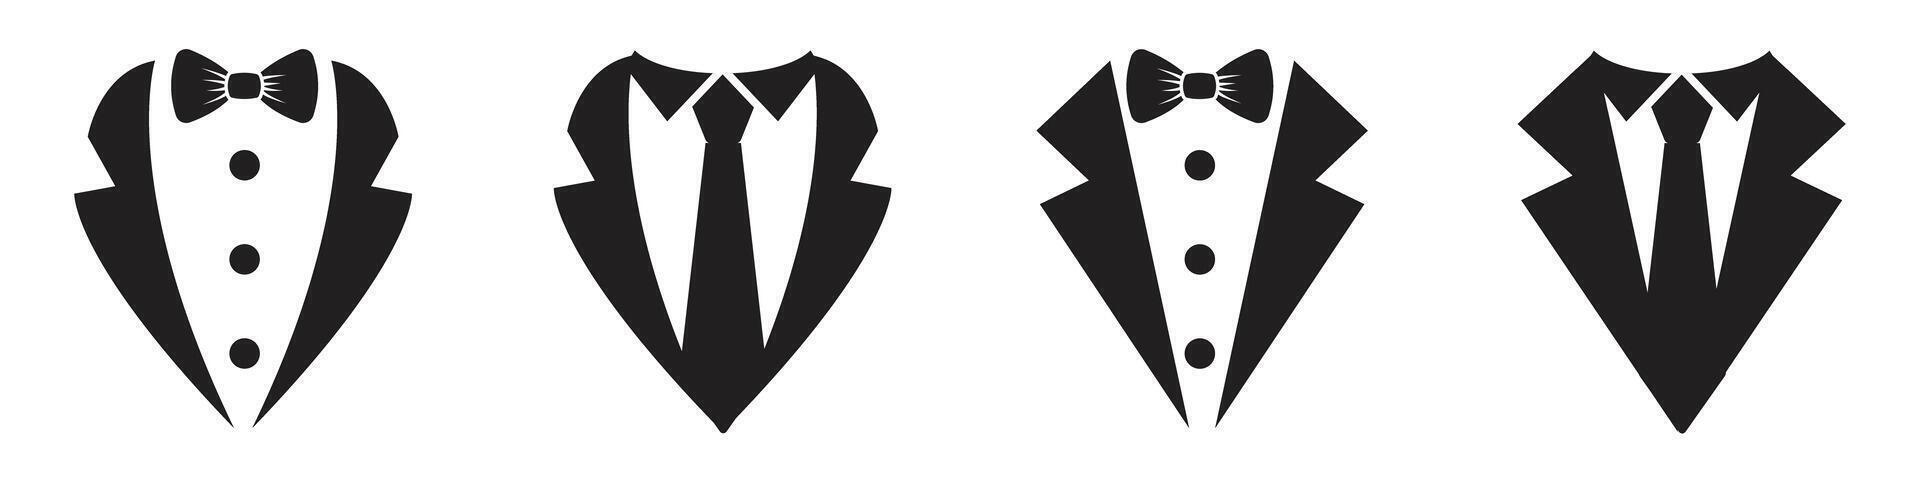 black tuxedo simple icon formal uniform for men black isolated tuxedo with tie vector